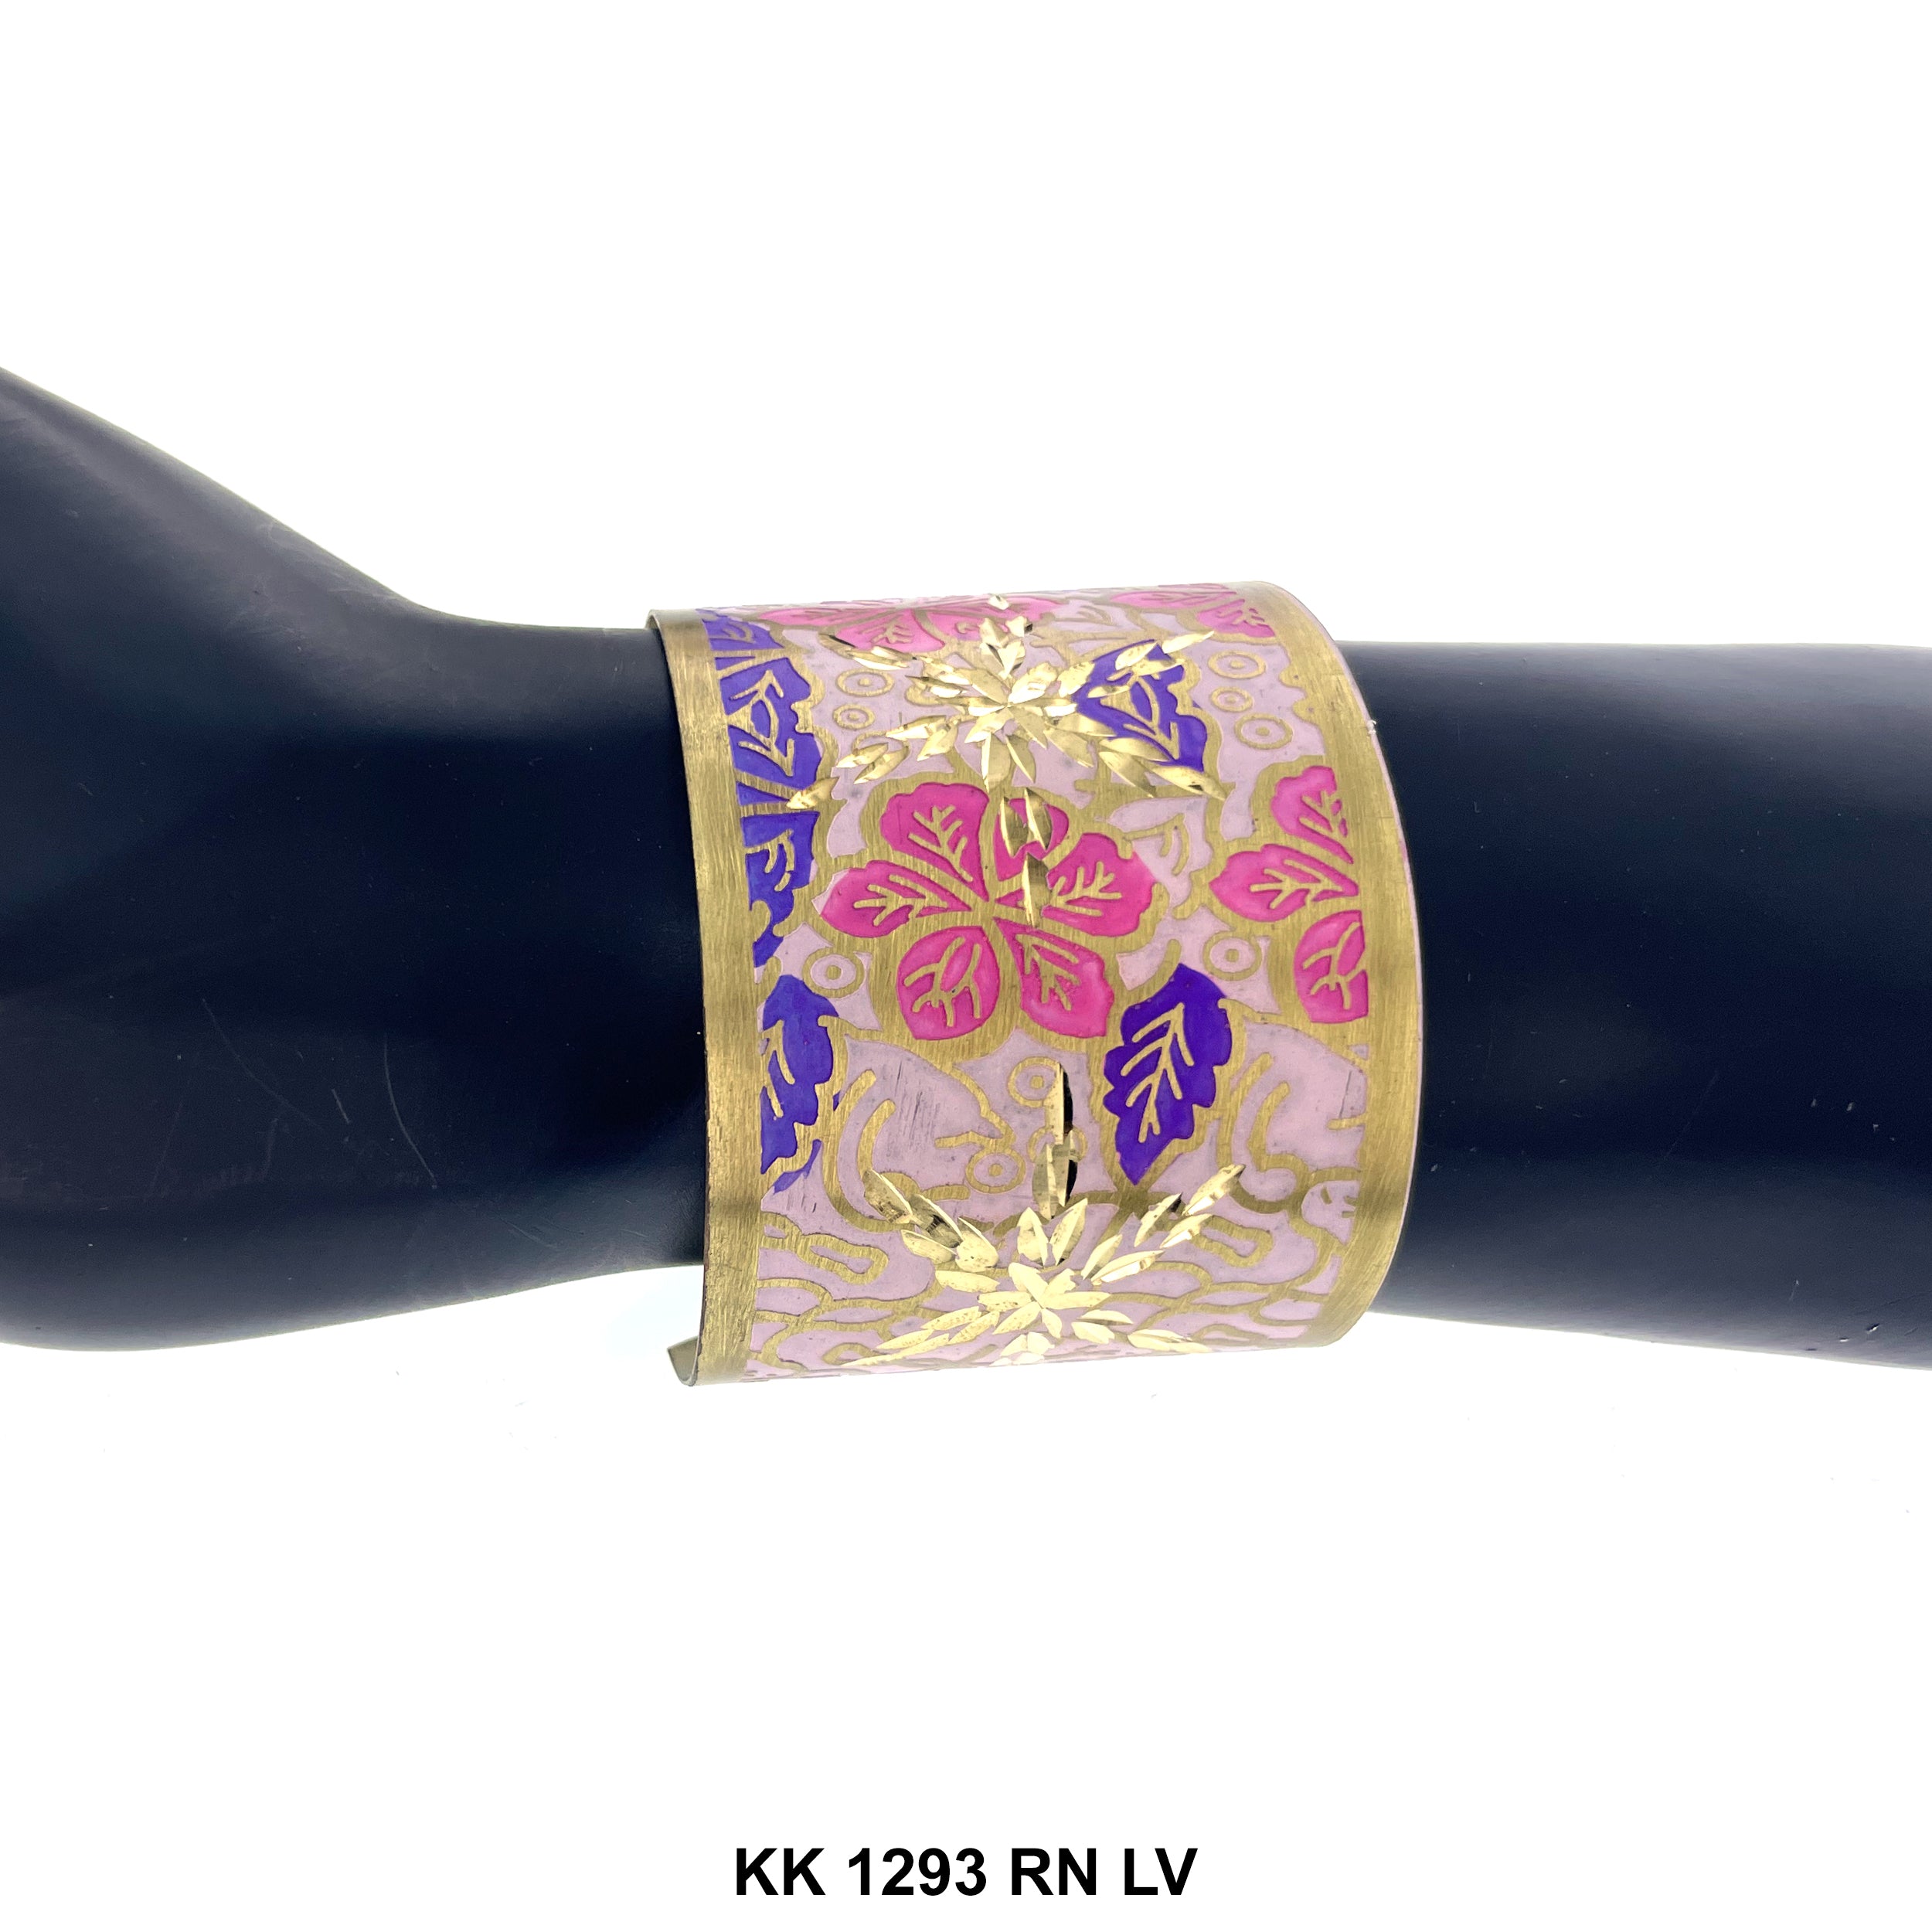 Hand Engraved Cuff Bangle Bracelet KK 1293 RN LV